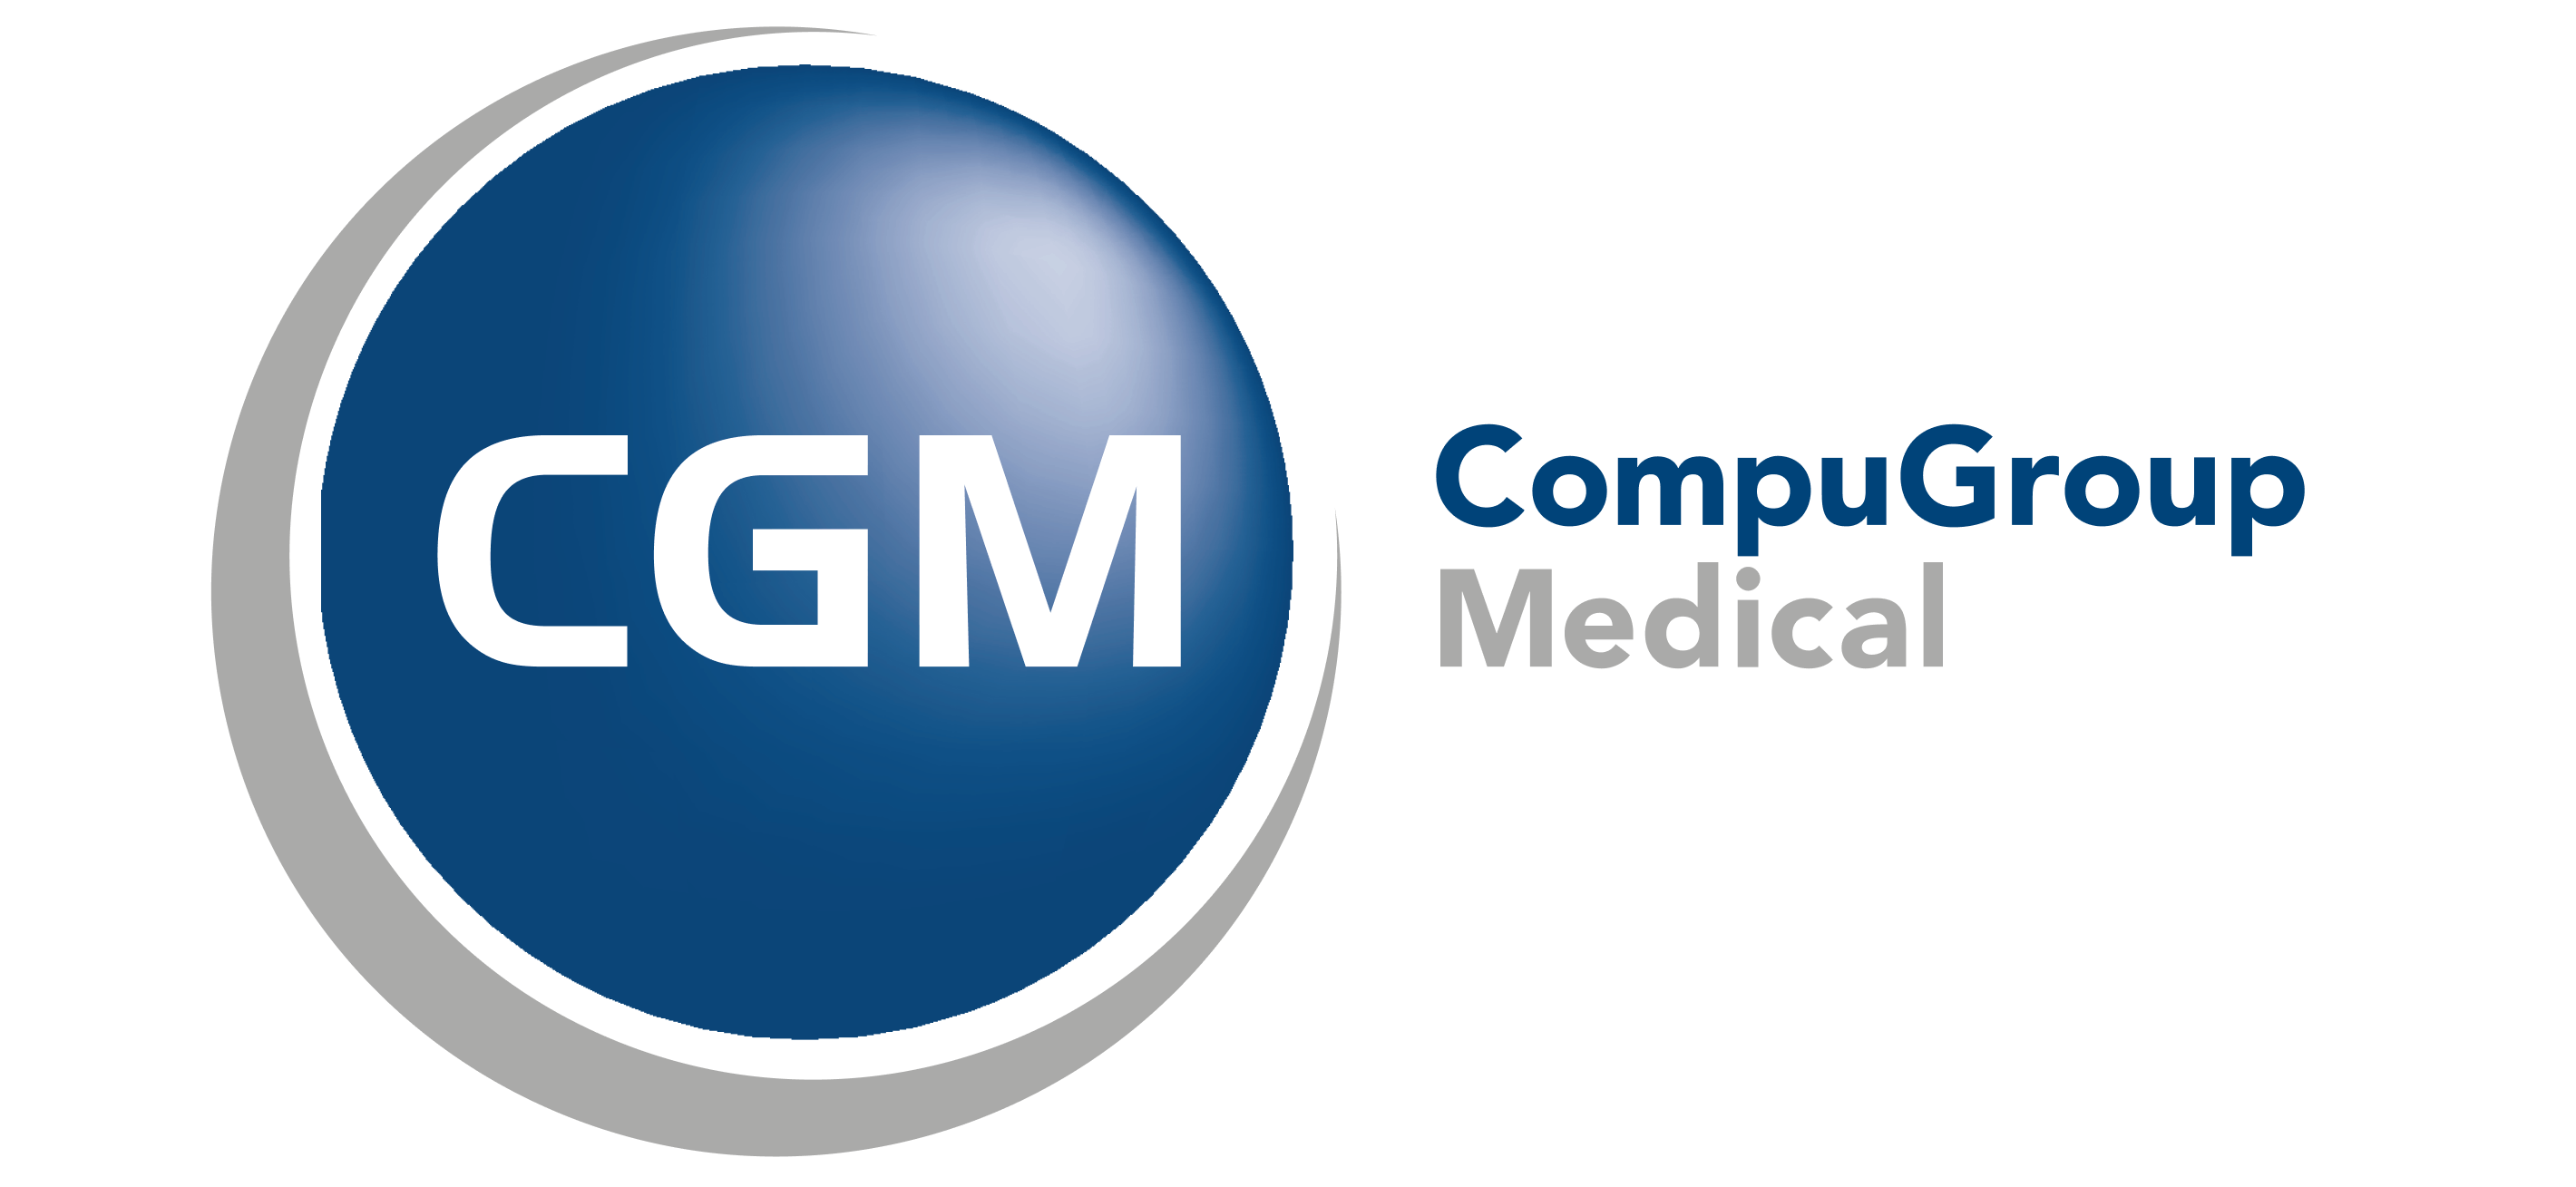 compugroupmedical cgm logo